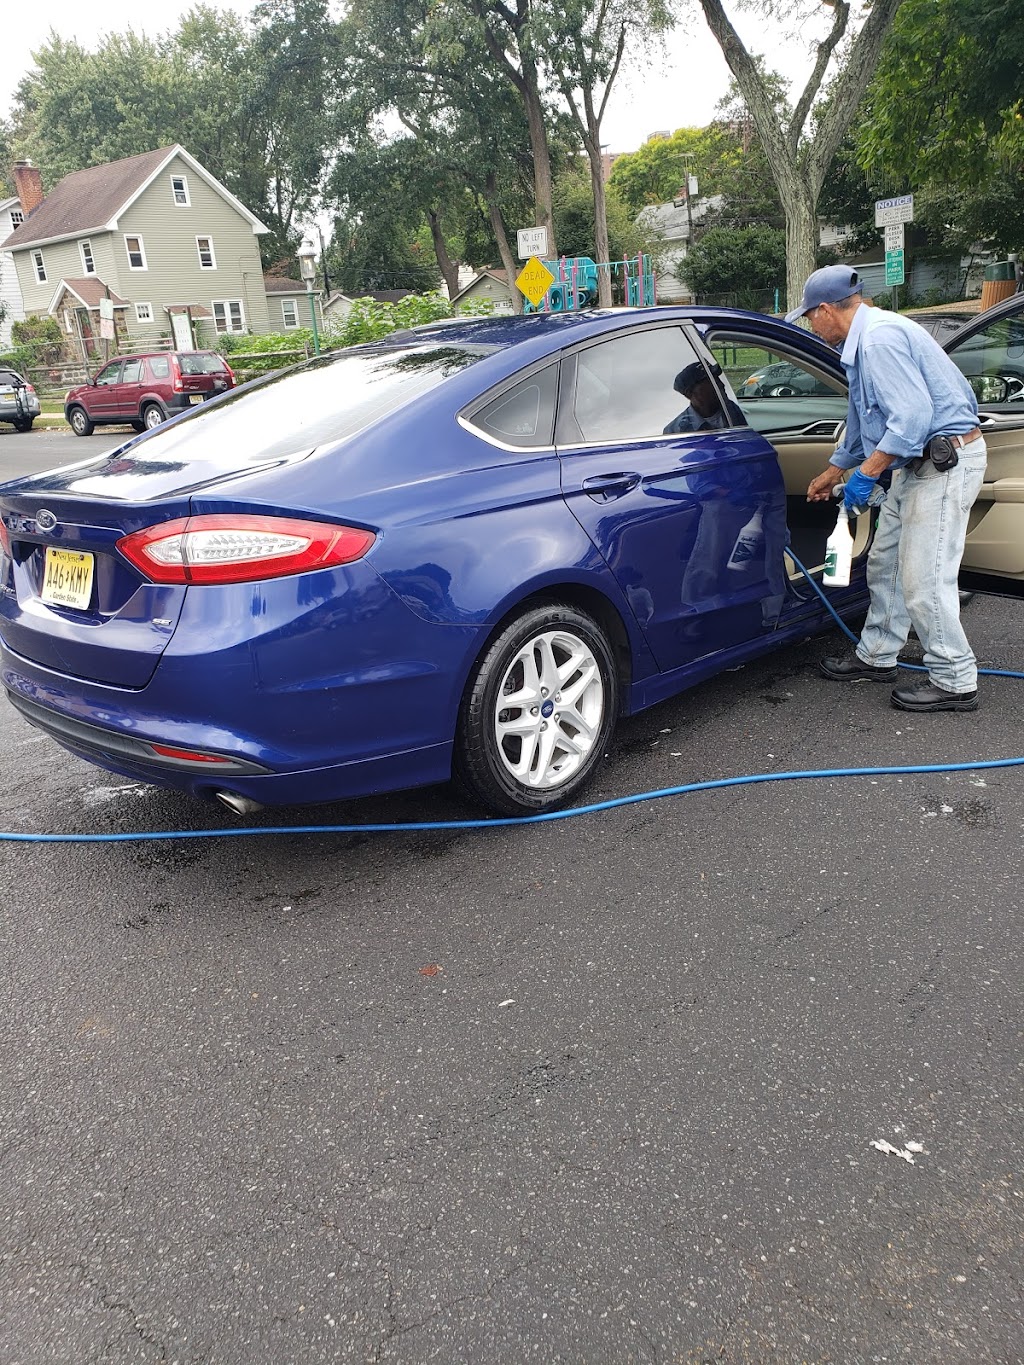 Clean Way Car Wash | 415 Irvington Ave, South Orange, NJ 07079 | Phone: (973) 762-3900